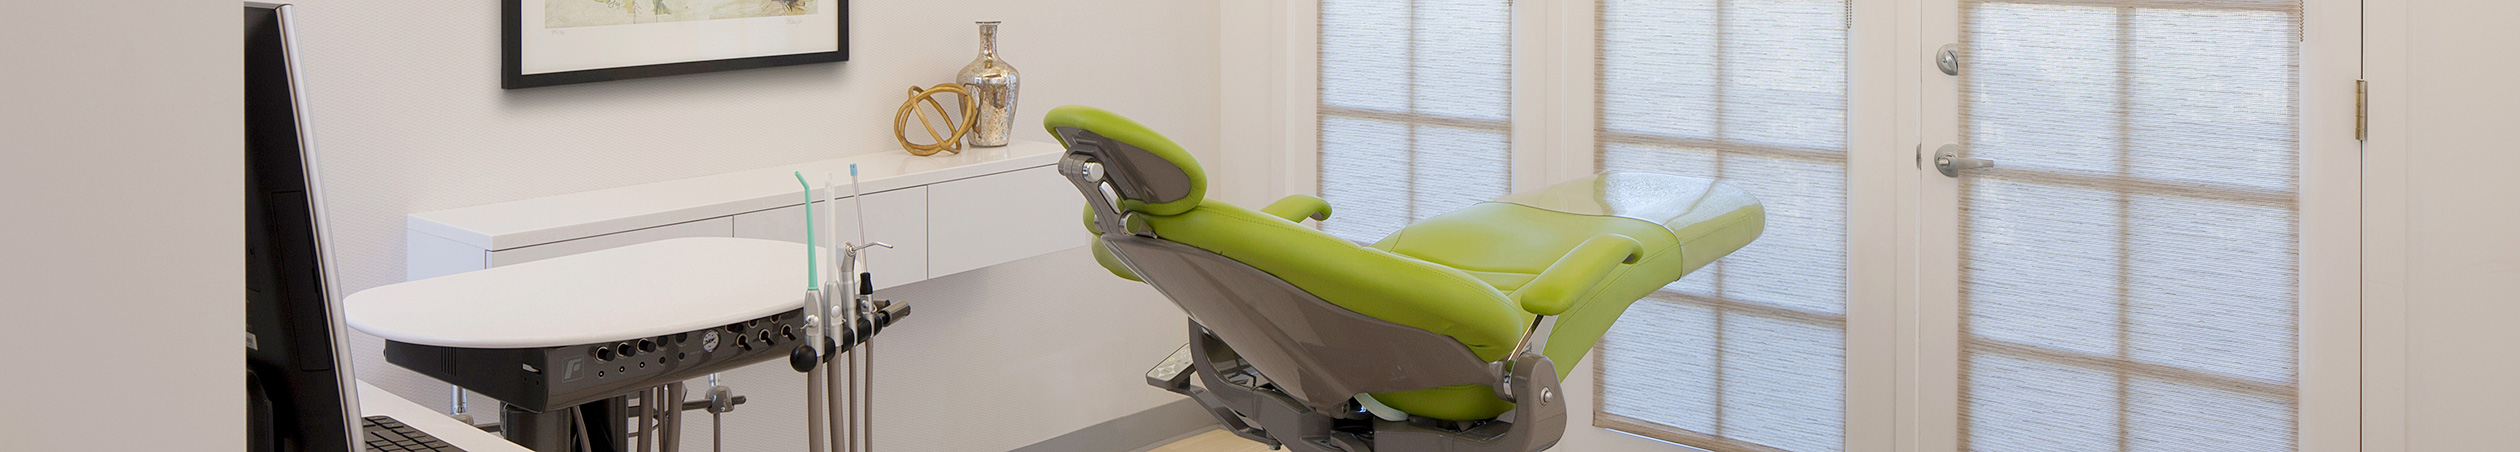 Dental Treatment Room Chair